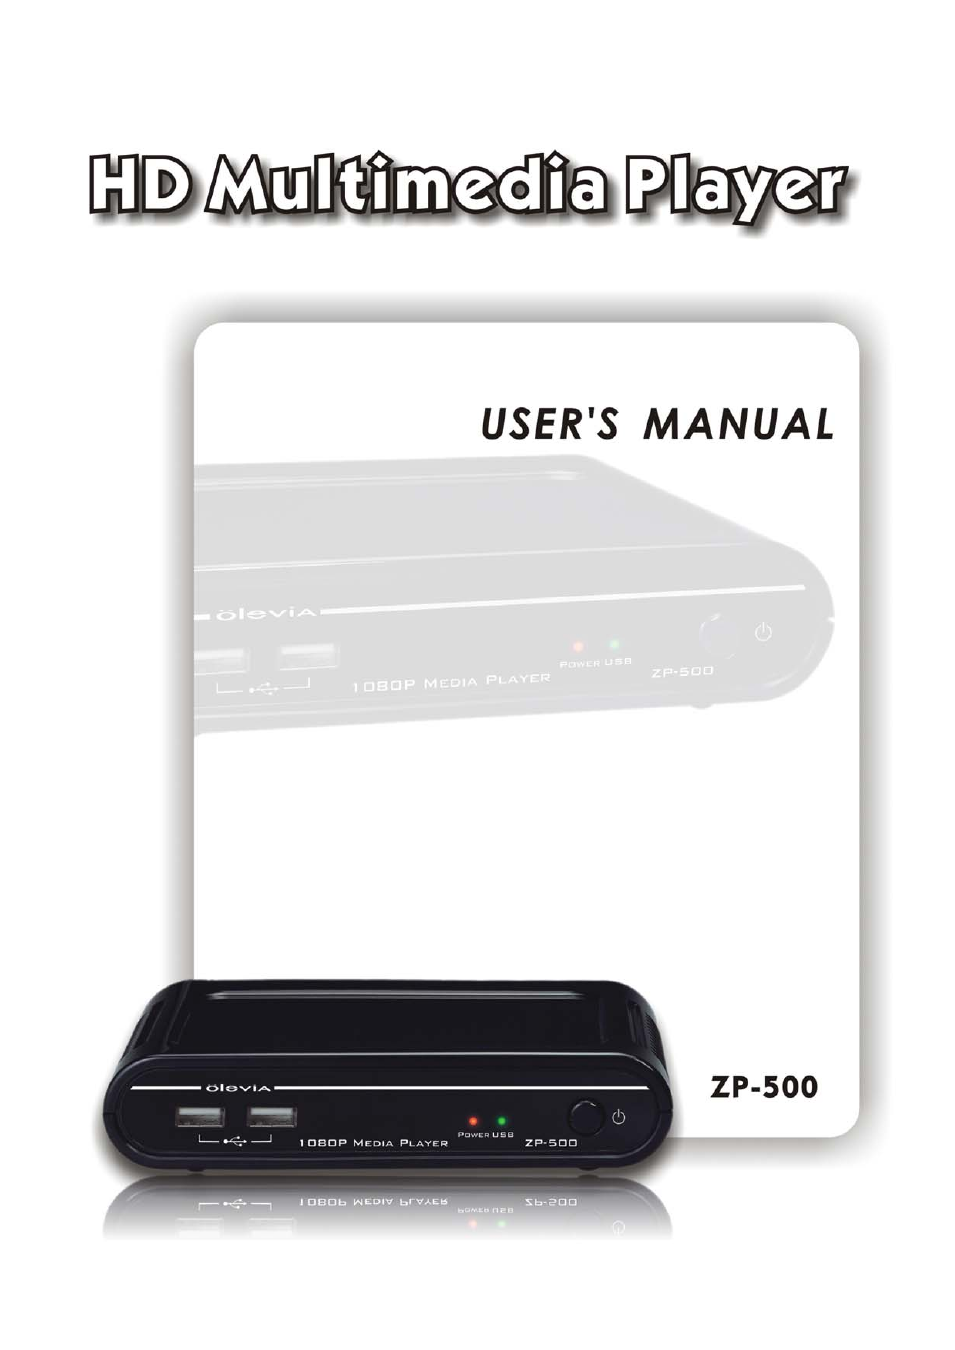 HD Multimedia Player ZP-500